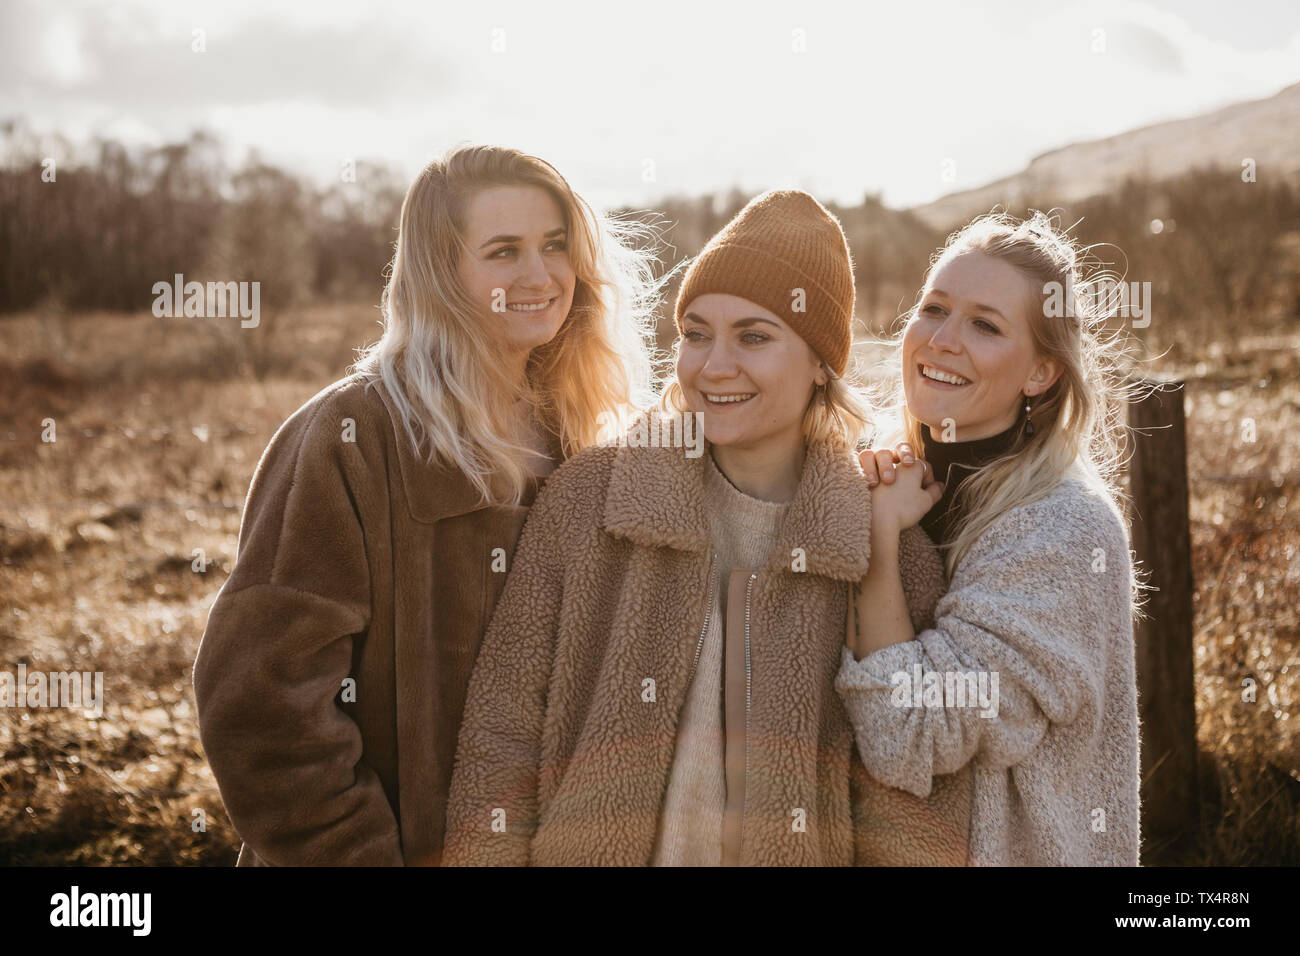 UK, Scotland, happy female friends in rural landscape Stock Photo